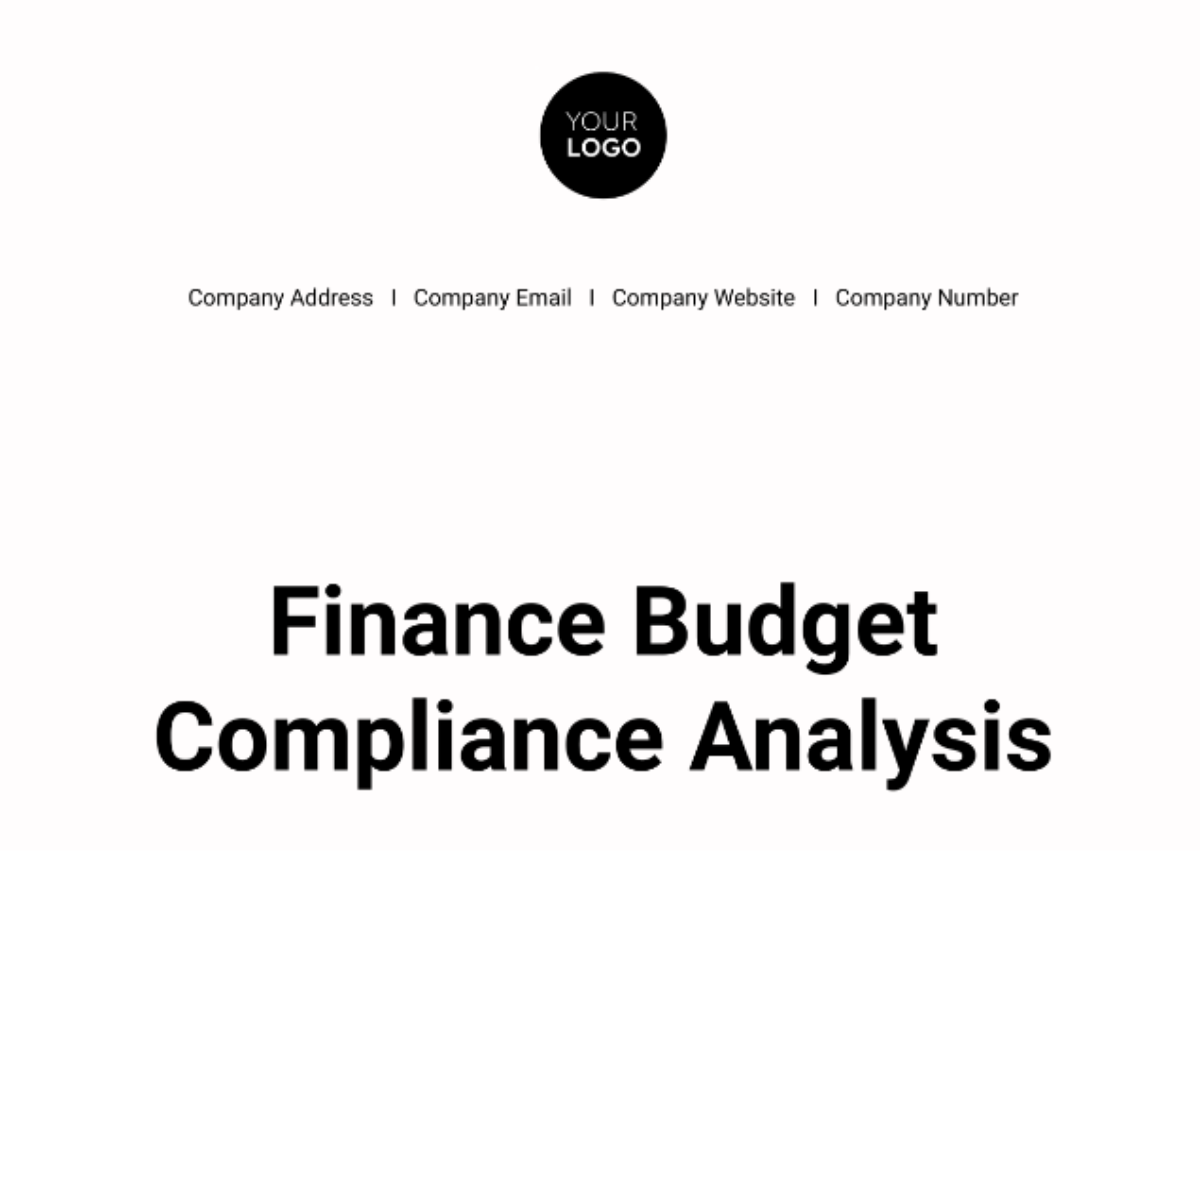 Finance Budget Compliance Analysis Template